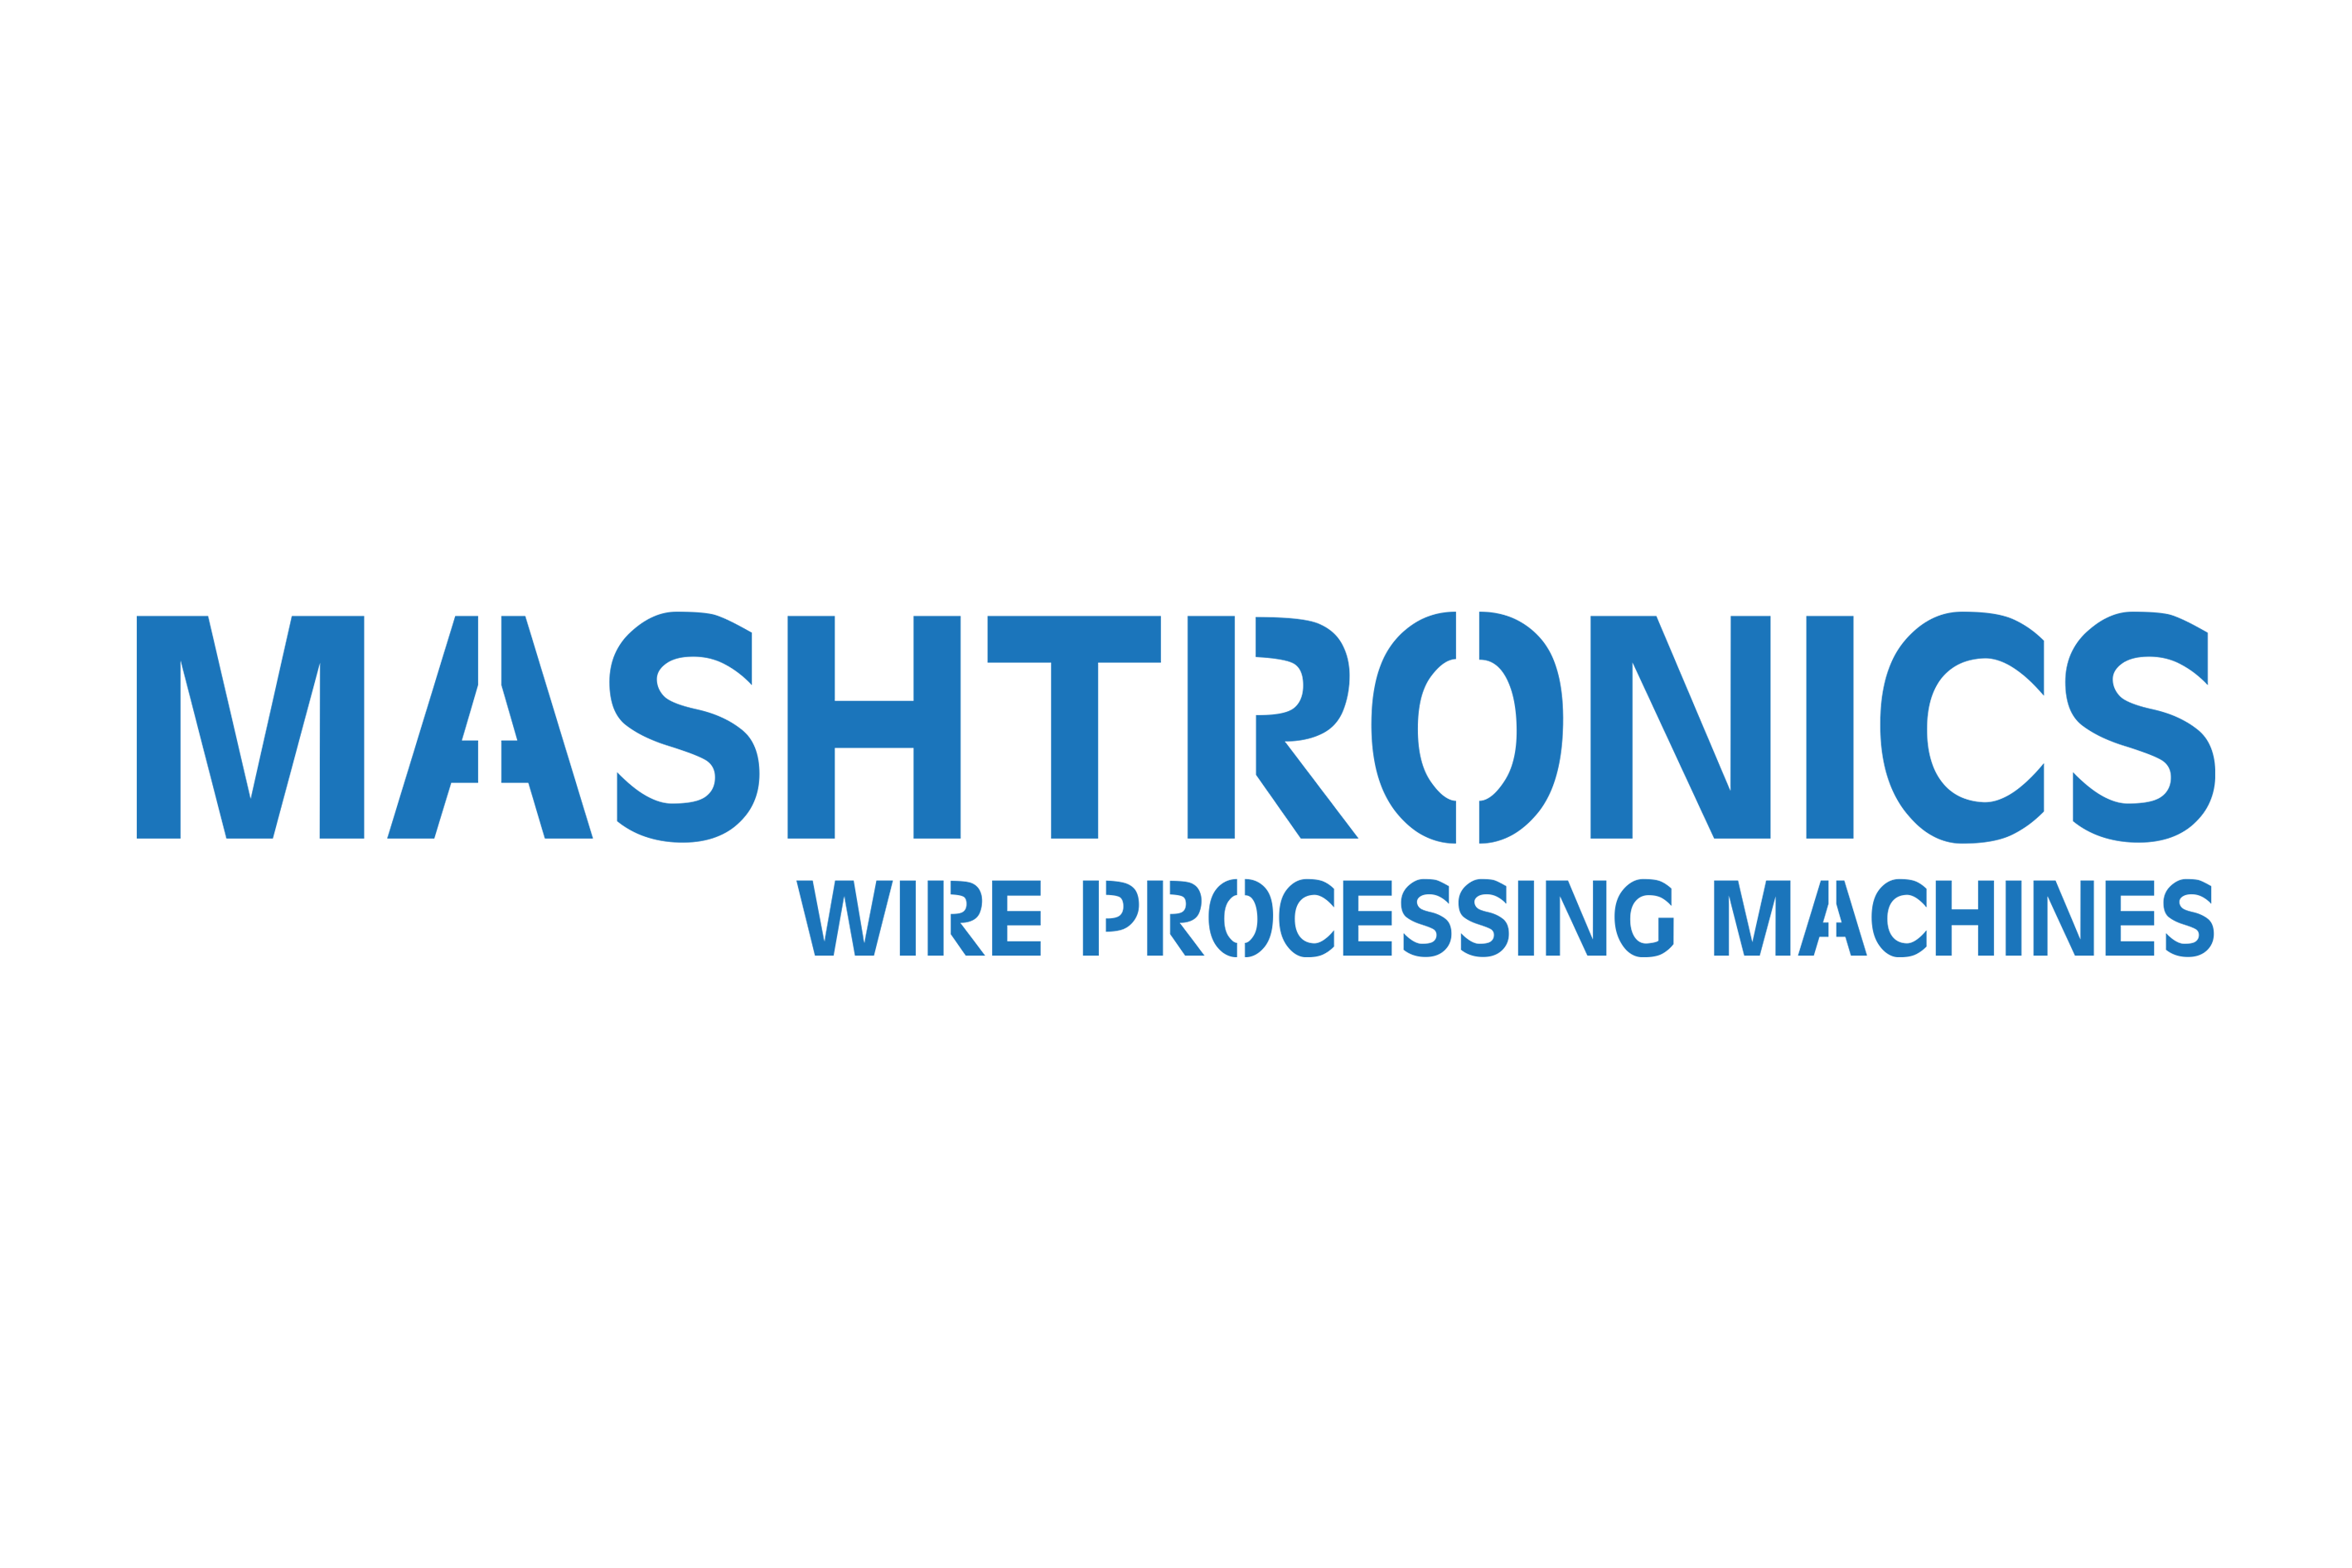 Mashtronics Wire Processing Machines